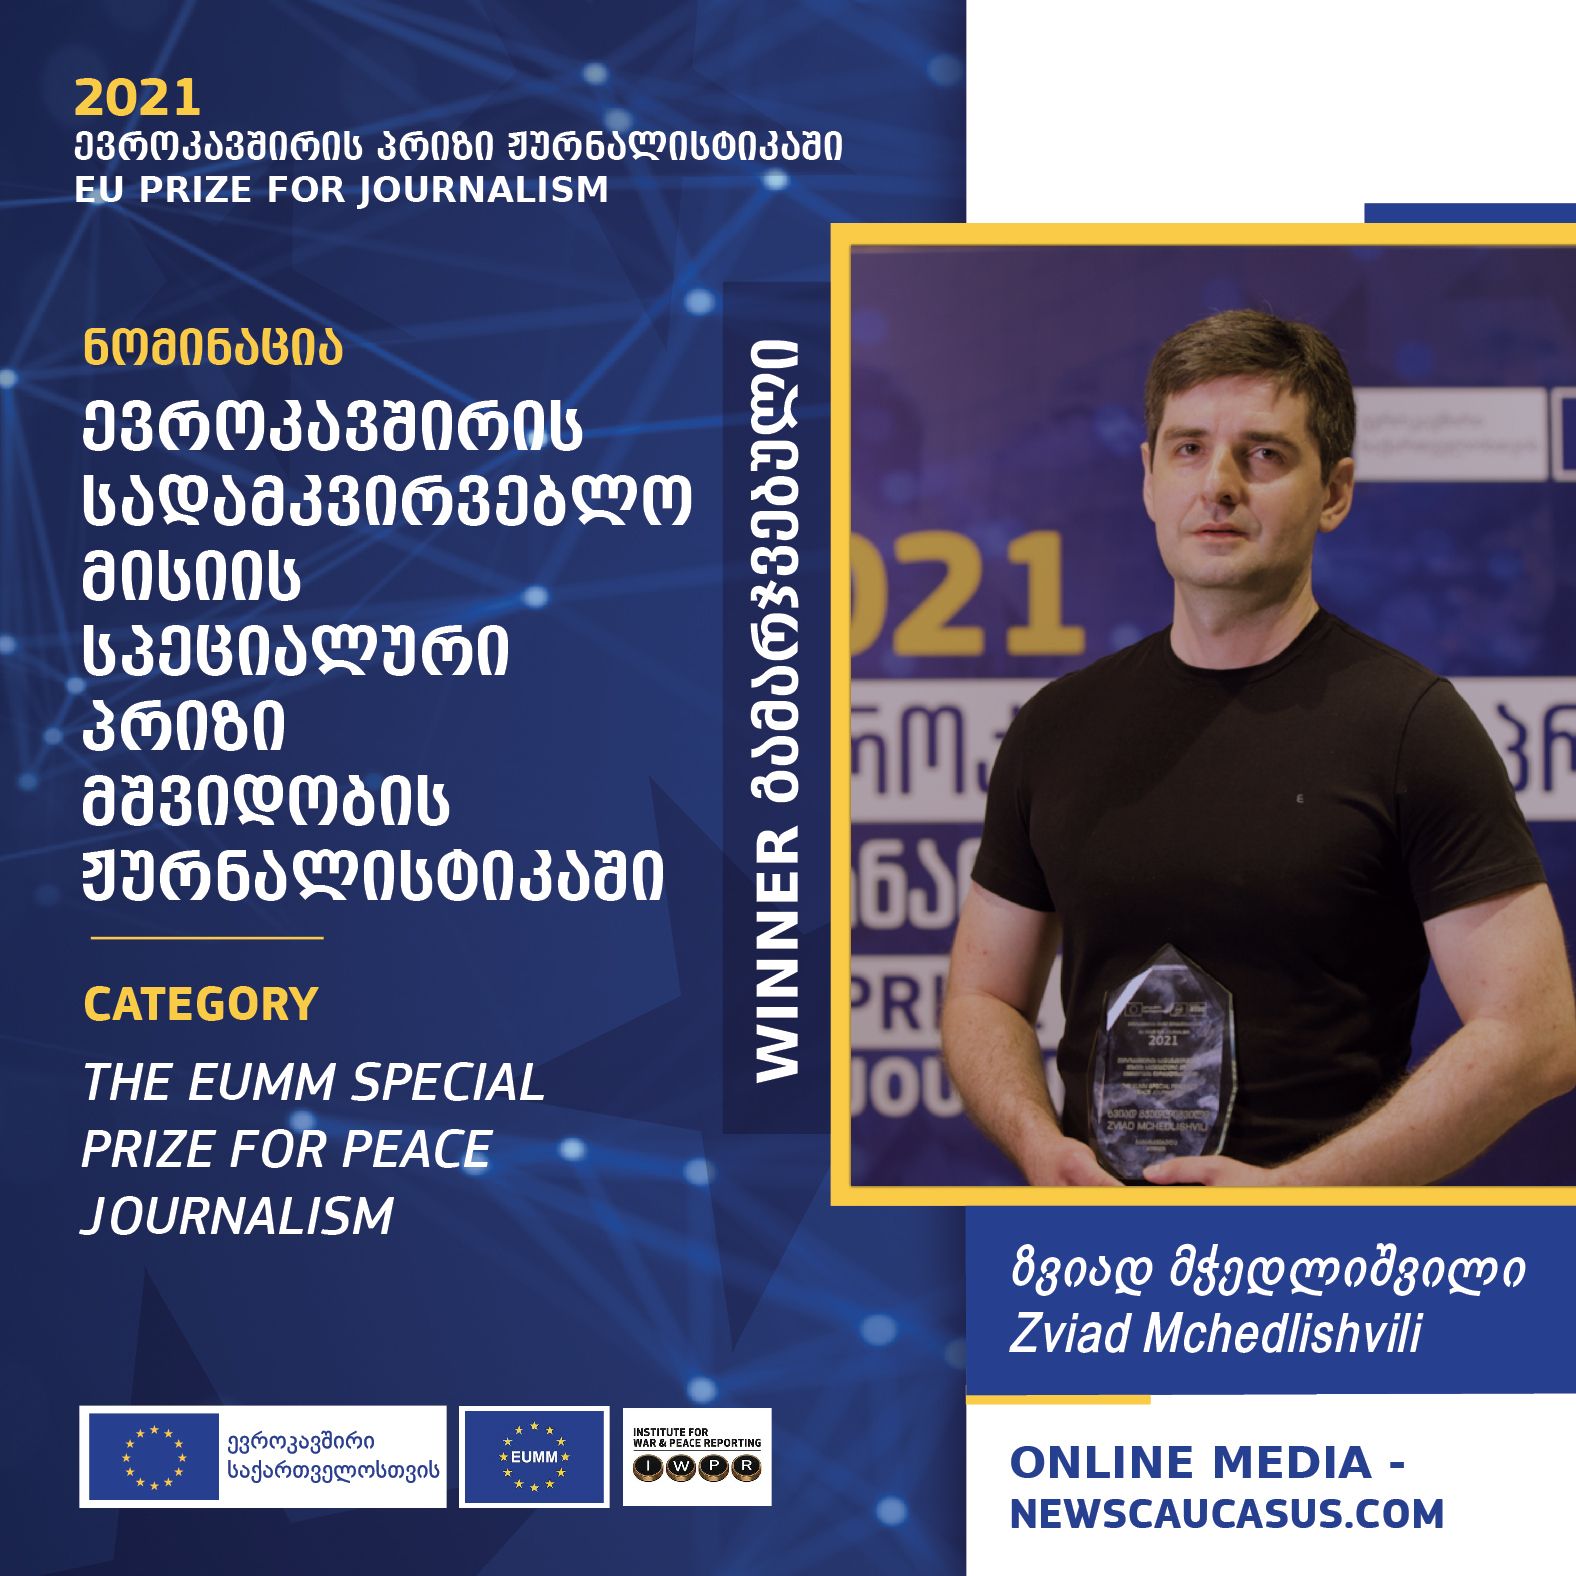 EU Prize for Journalism 2021 winner